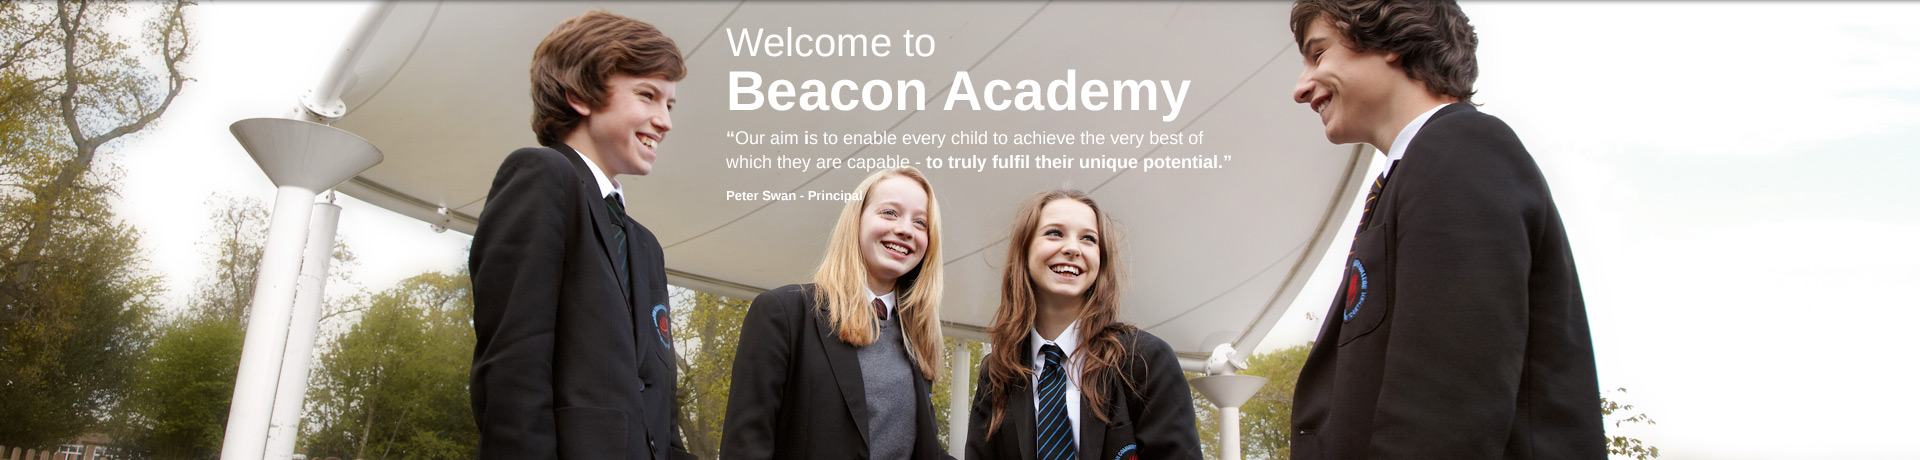 Beacon Academy - one of Jakarta’s youngest international schools